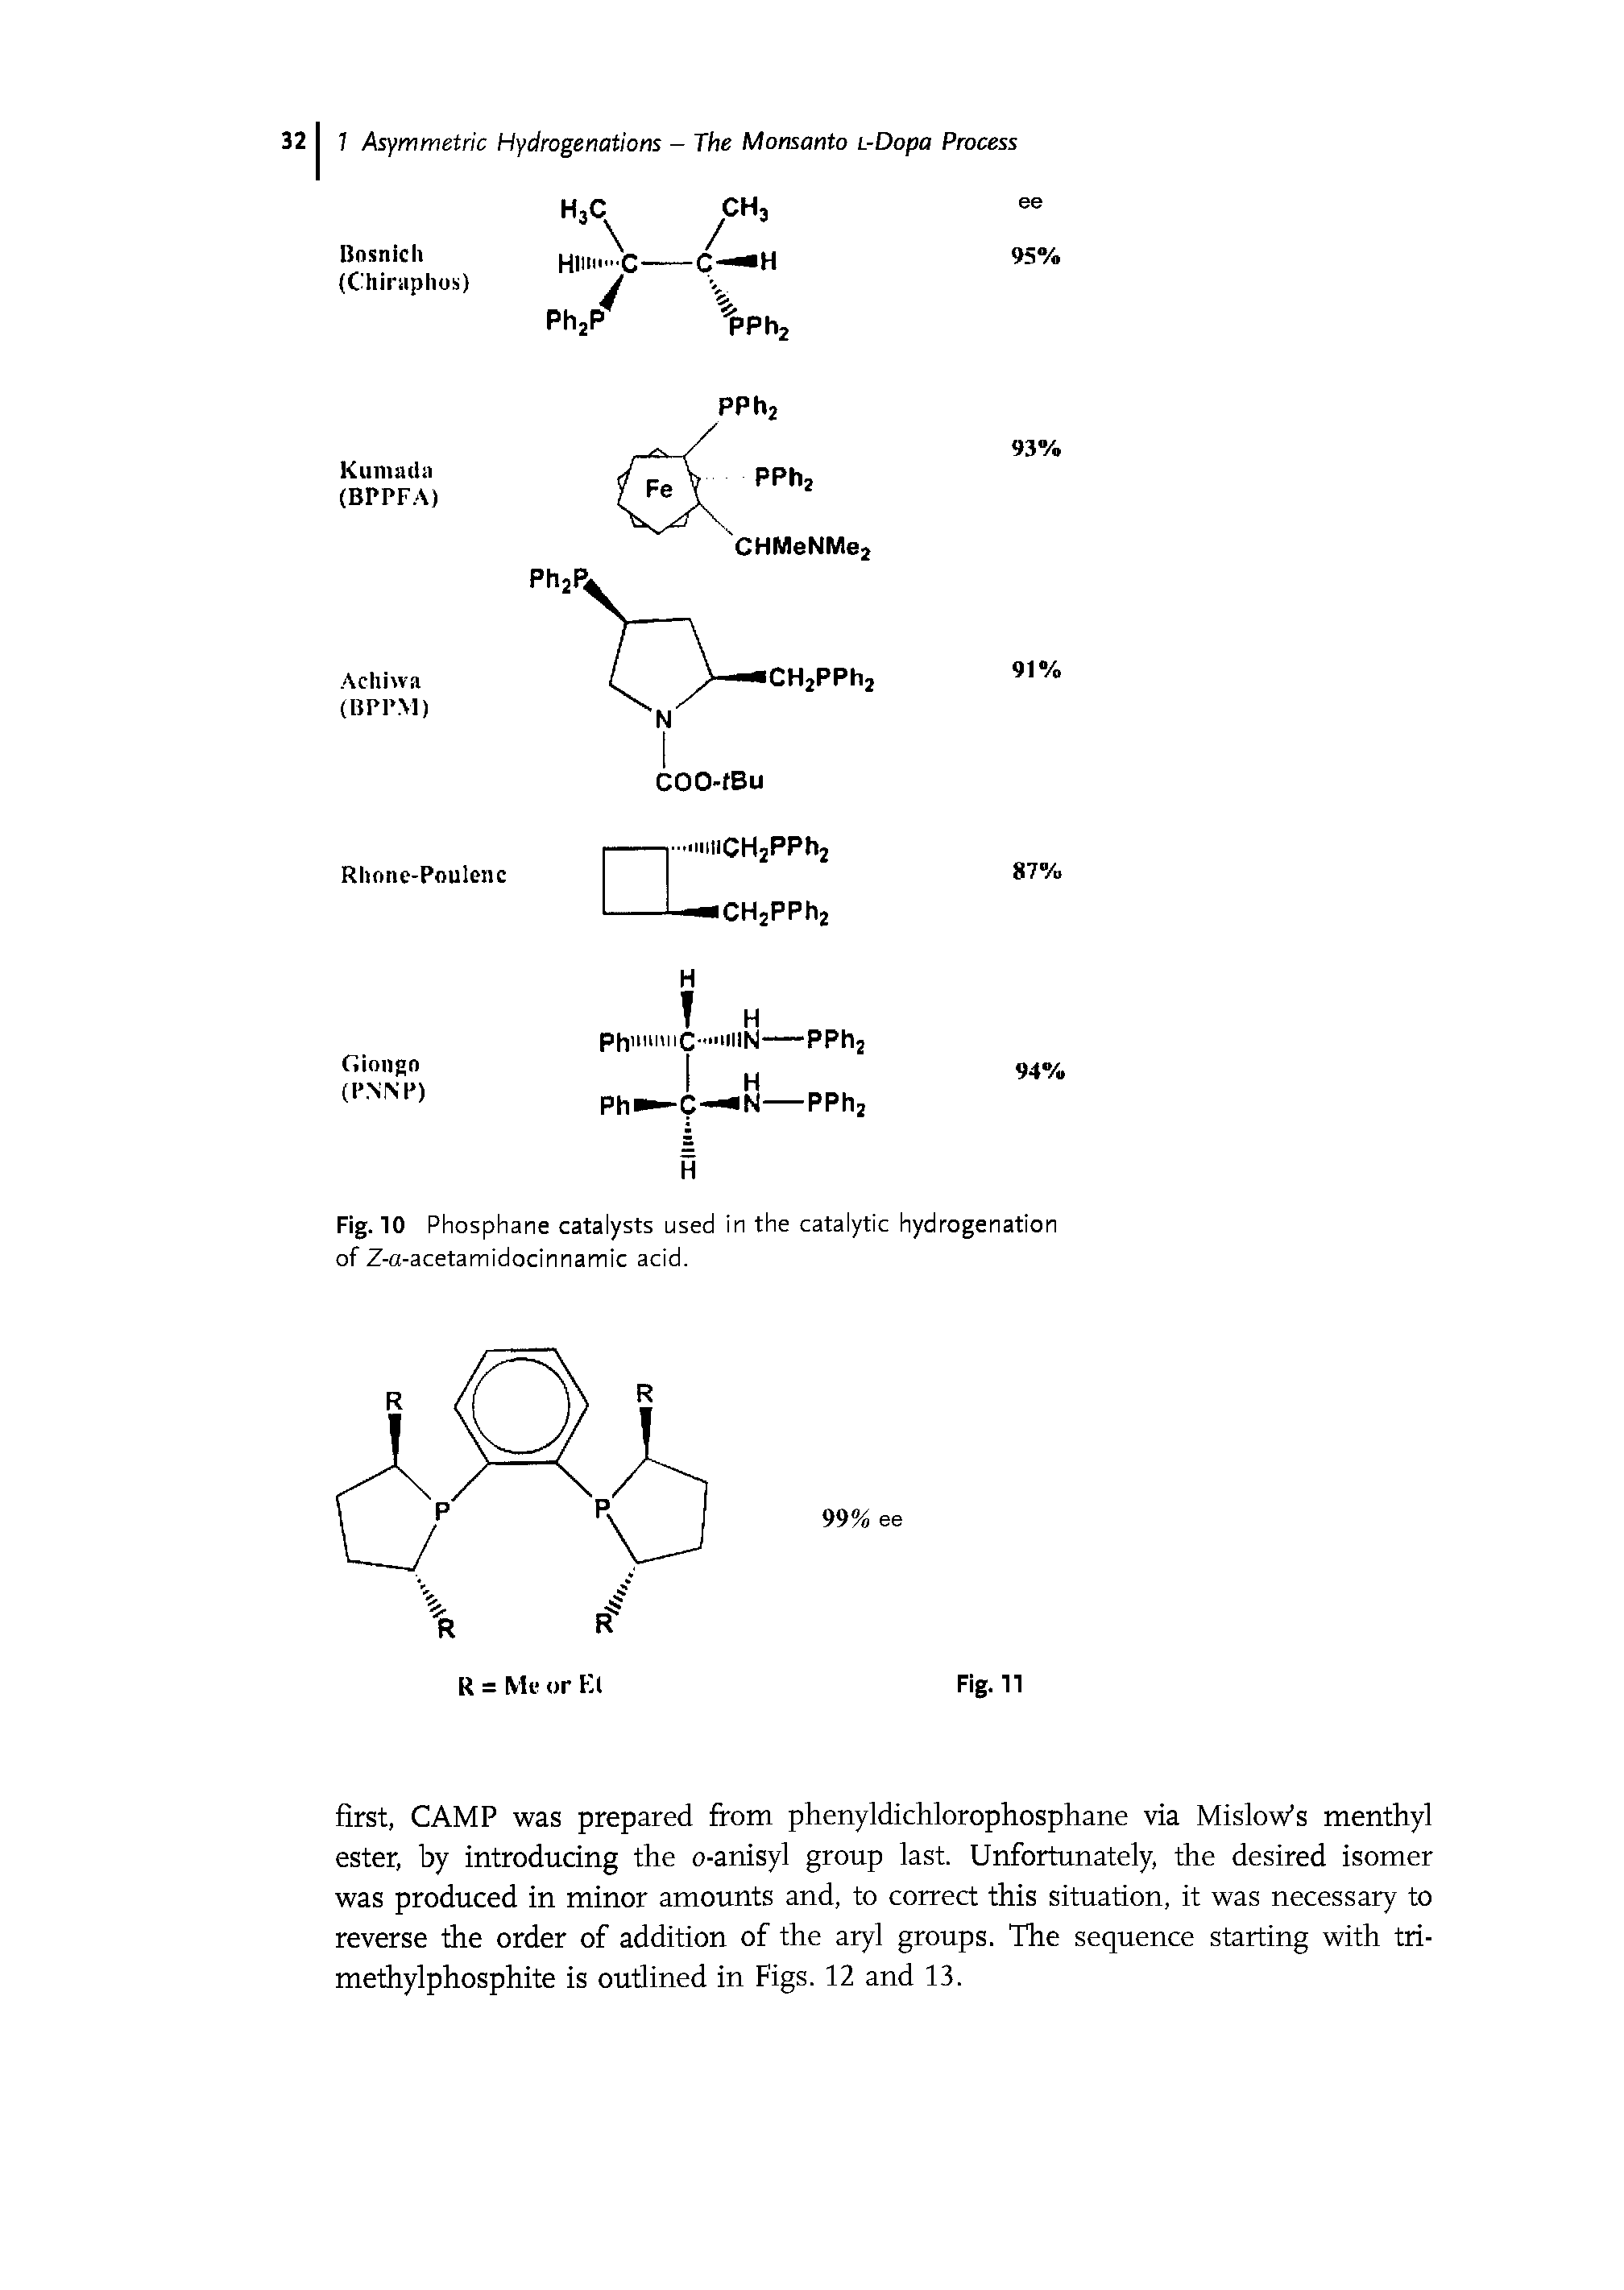 Fig. 10 Phosphane catalysts used in the catalytic hydrogenation of Z-a-acetamidocinnamic acid.